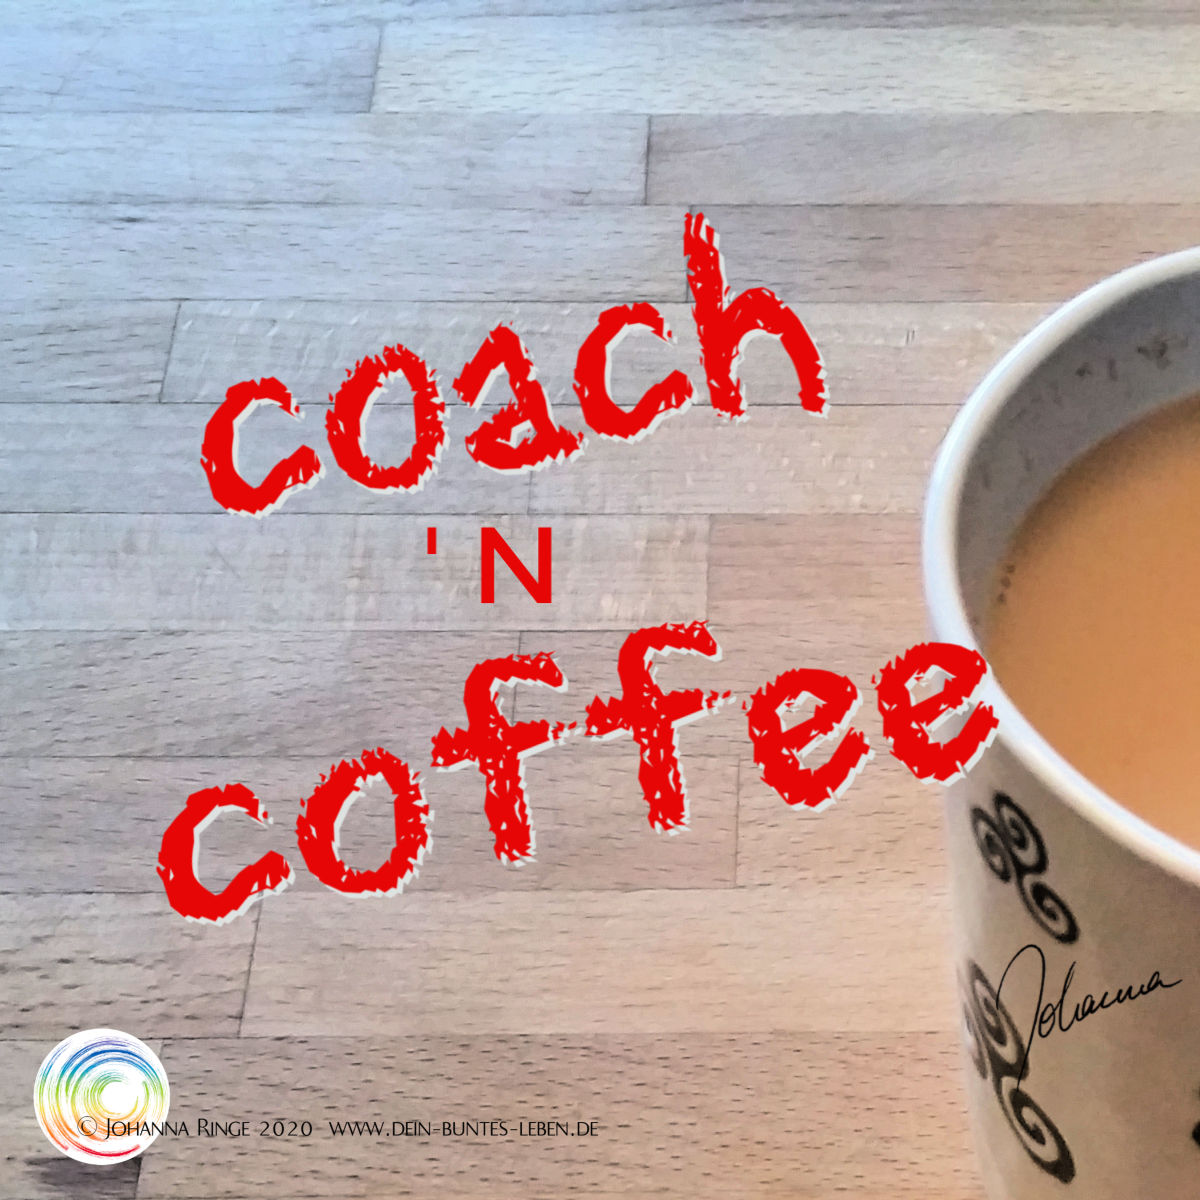 coach 'n coffee: intense coaching for misfits with Johanna Ringe ©2020 www.dein-buntes-leben.de & www.coach-n.coffee